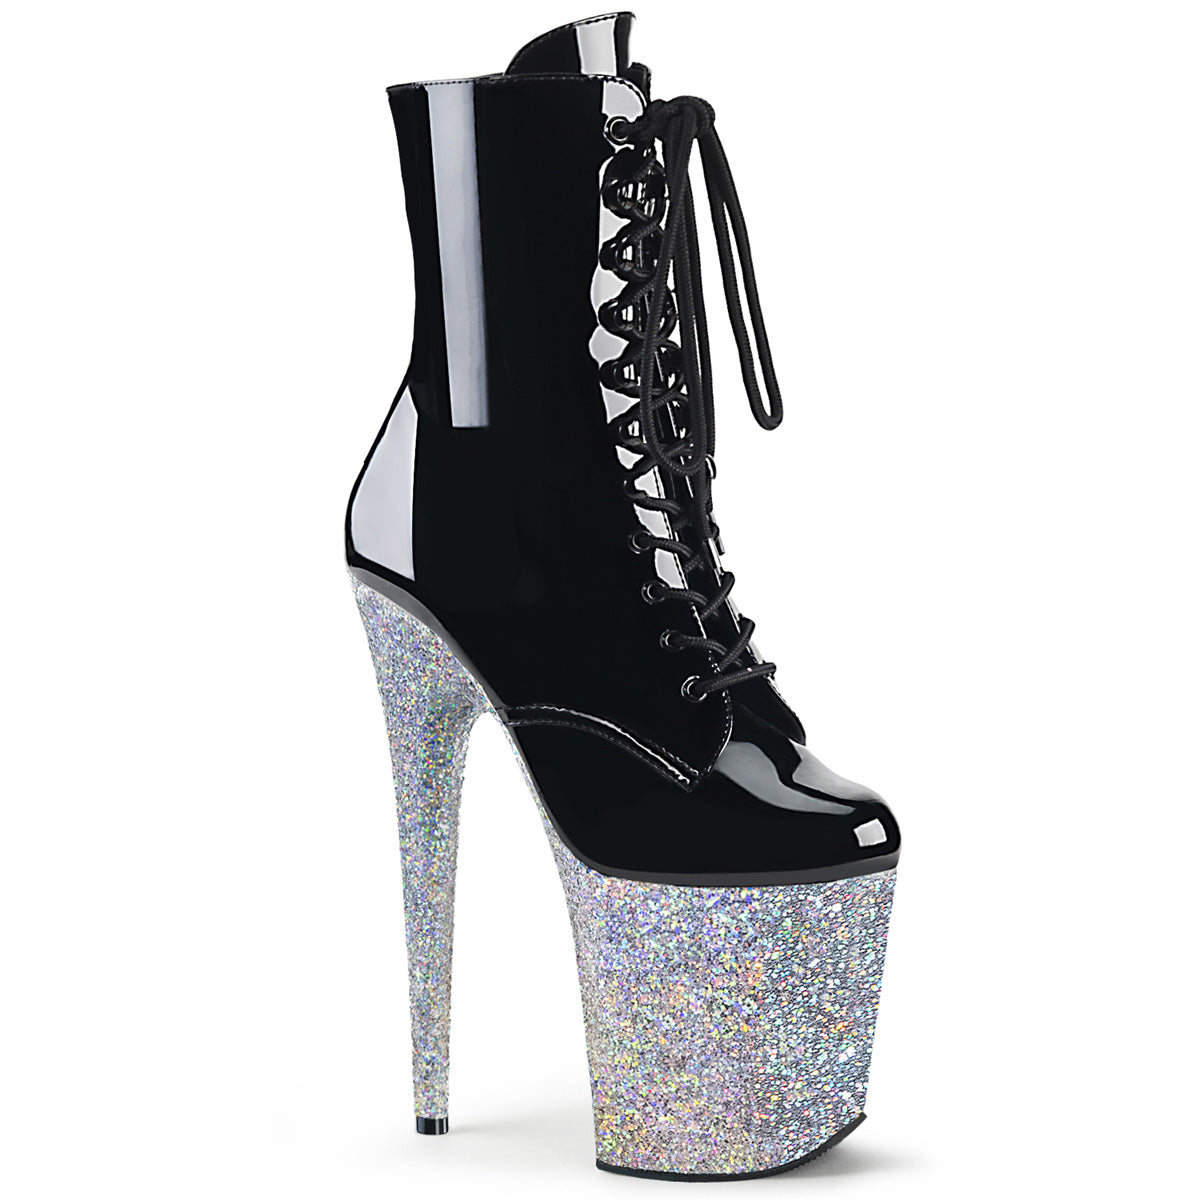 Pleaser Womens Ankle Boots FLAMINGO-1020LG Blk/Slv Multi Glitter